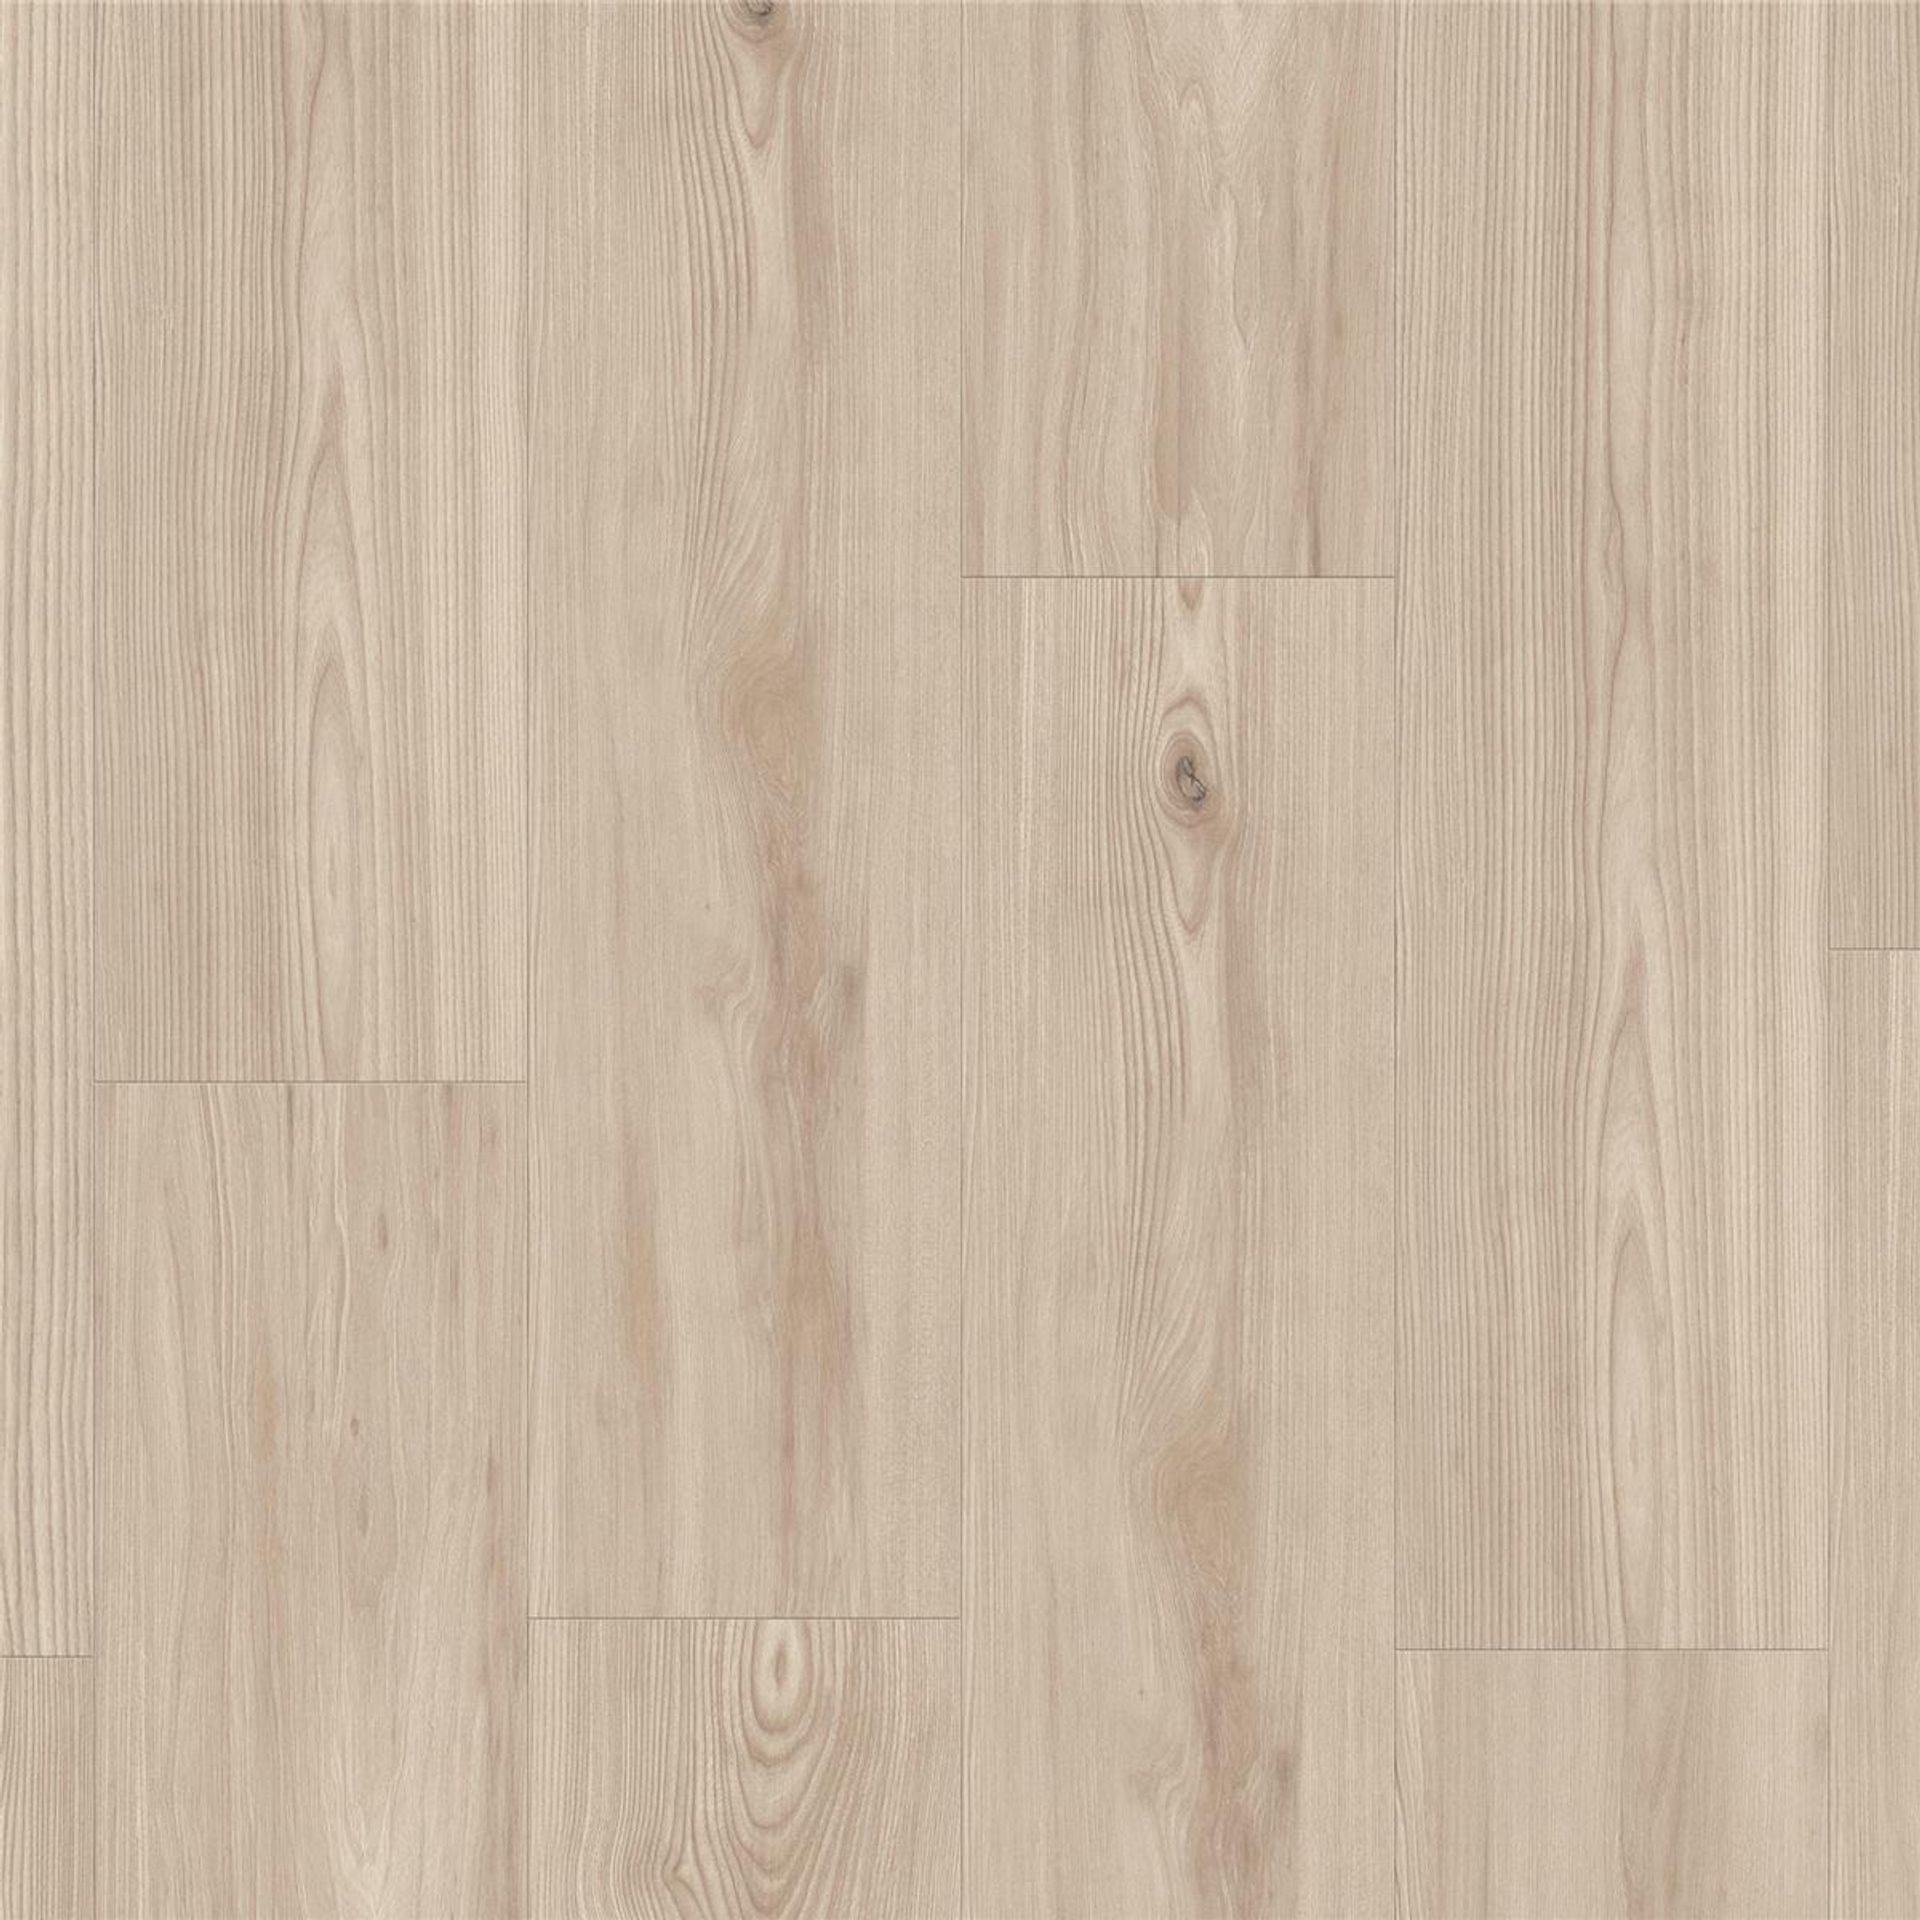 Designboden NATURALS-Brushed Elm-Grege Planke 120 cm x 28,5 cm - Nutzschichtdicke 0,55 mm